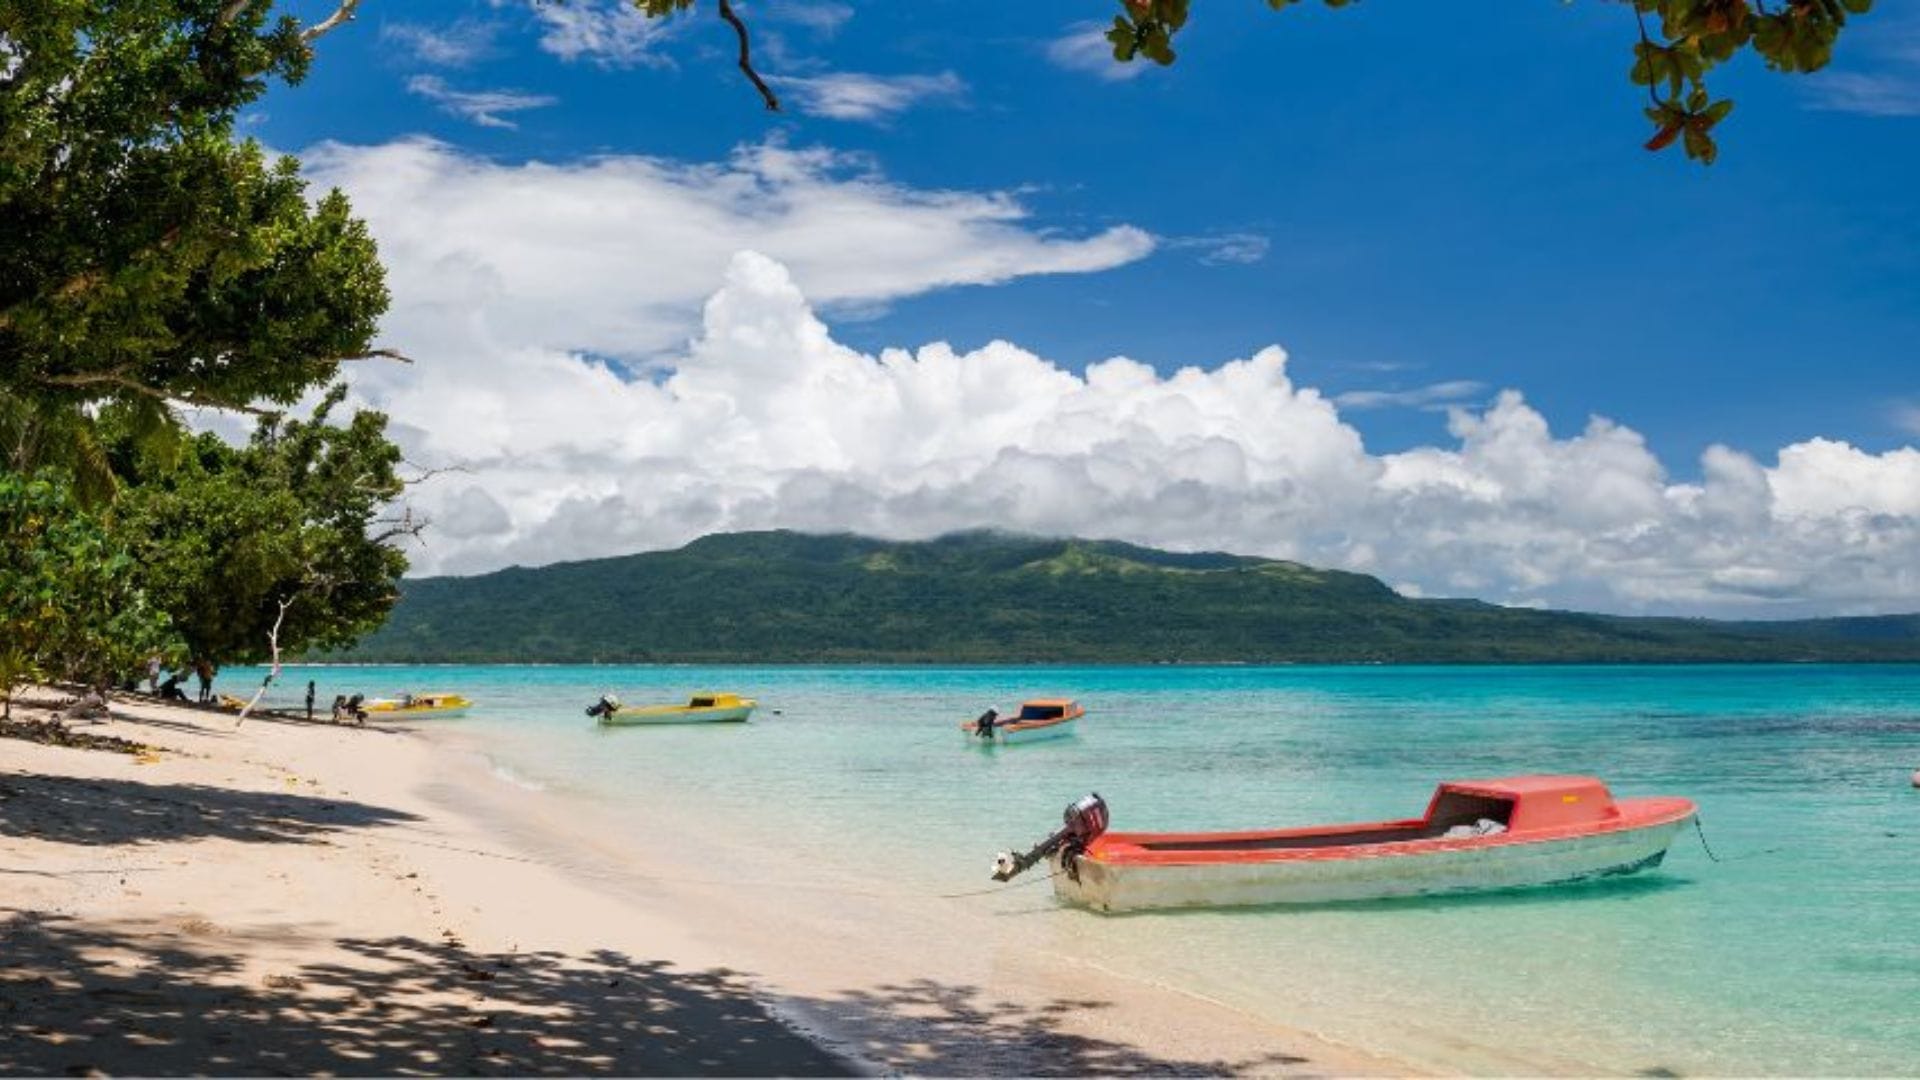 Top 5 Things to do in Vanuatu